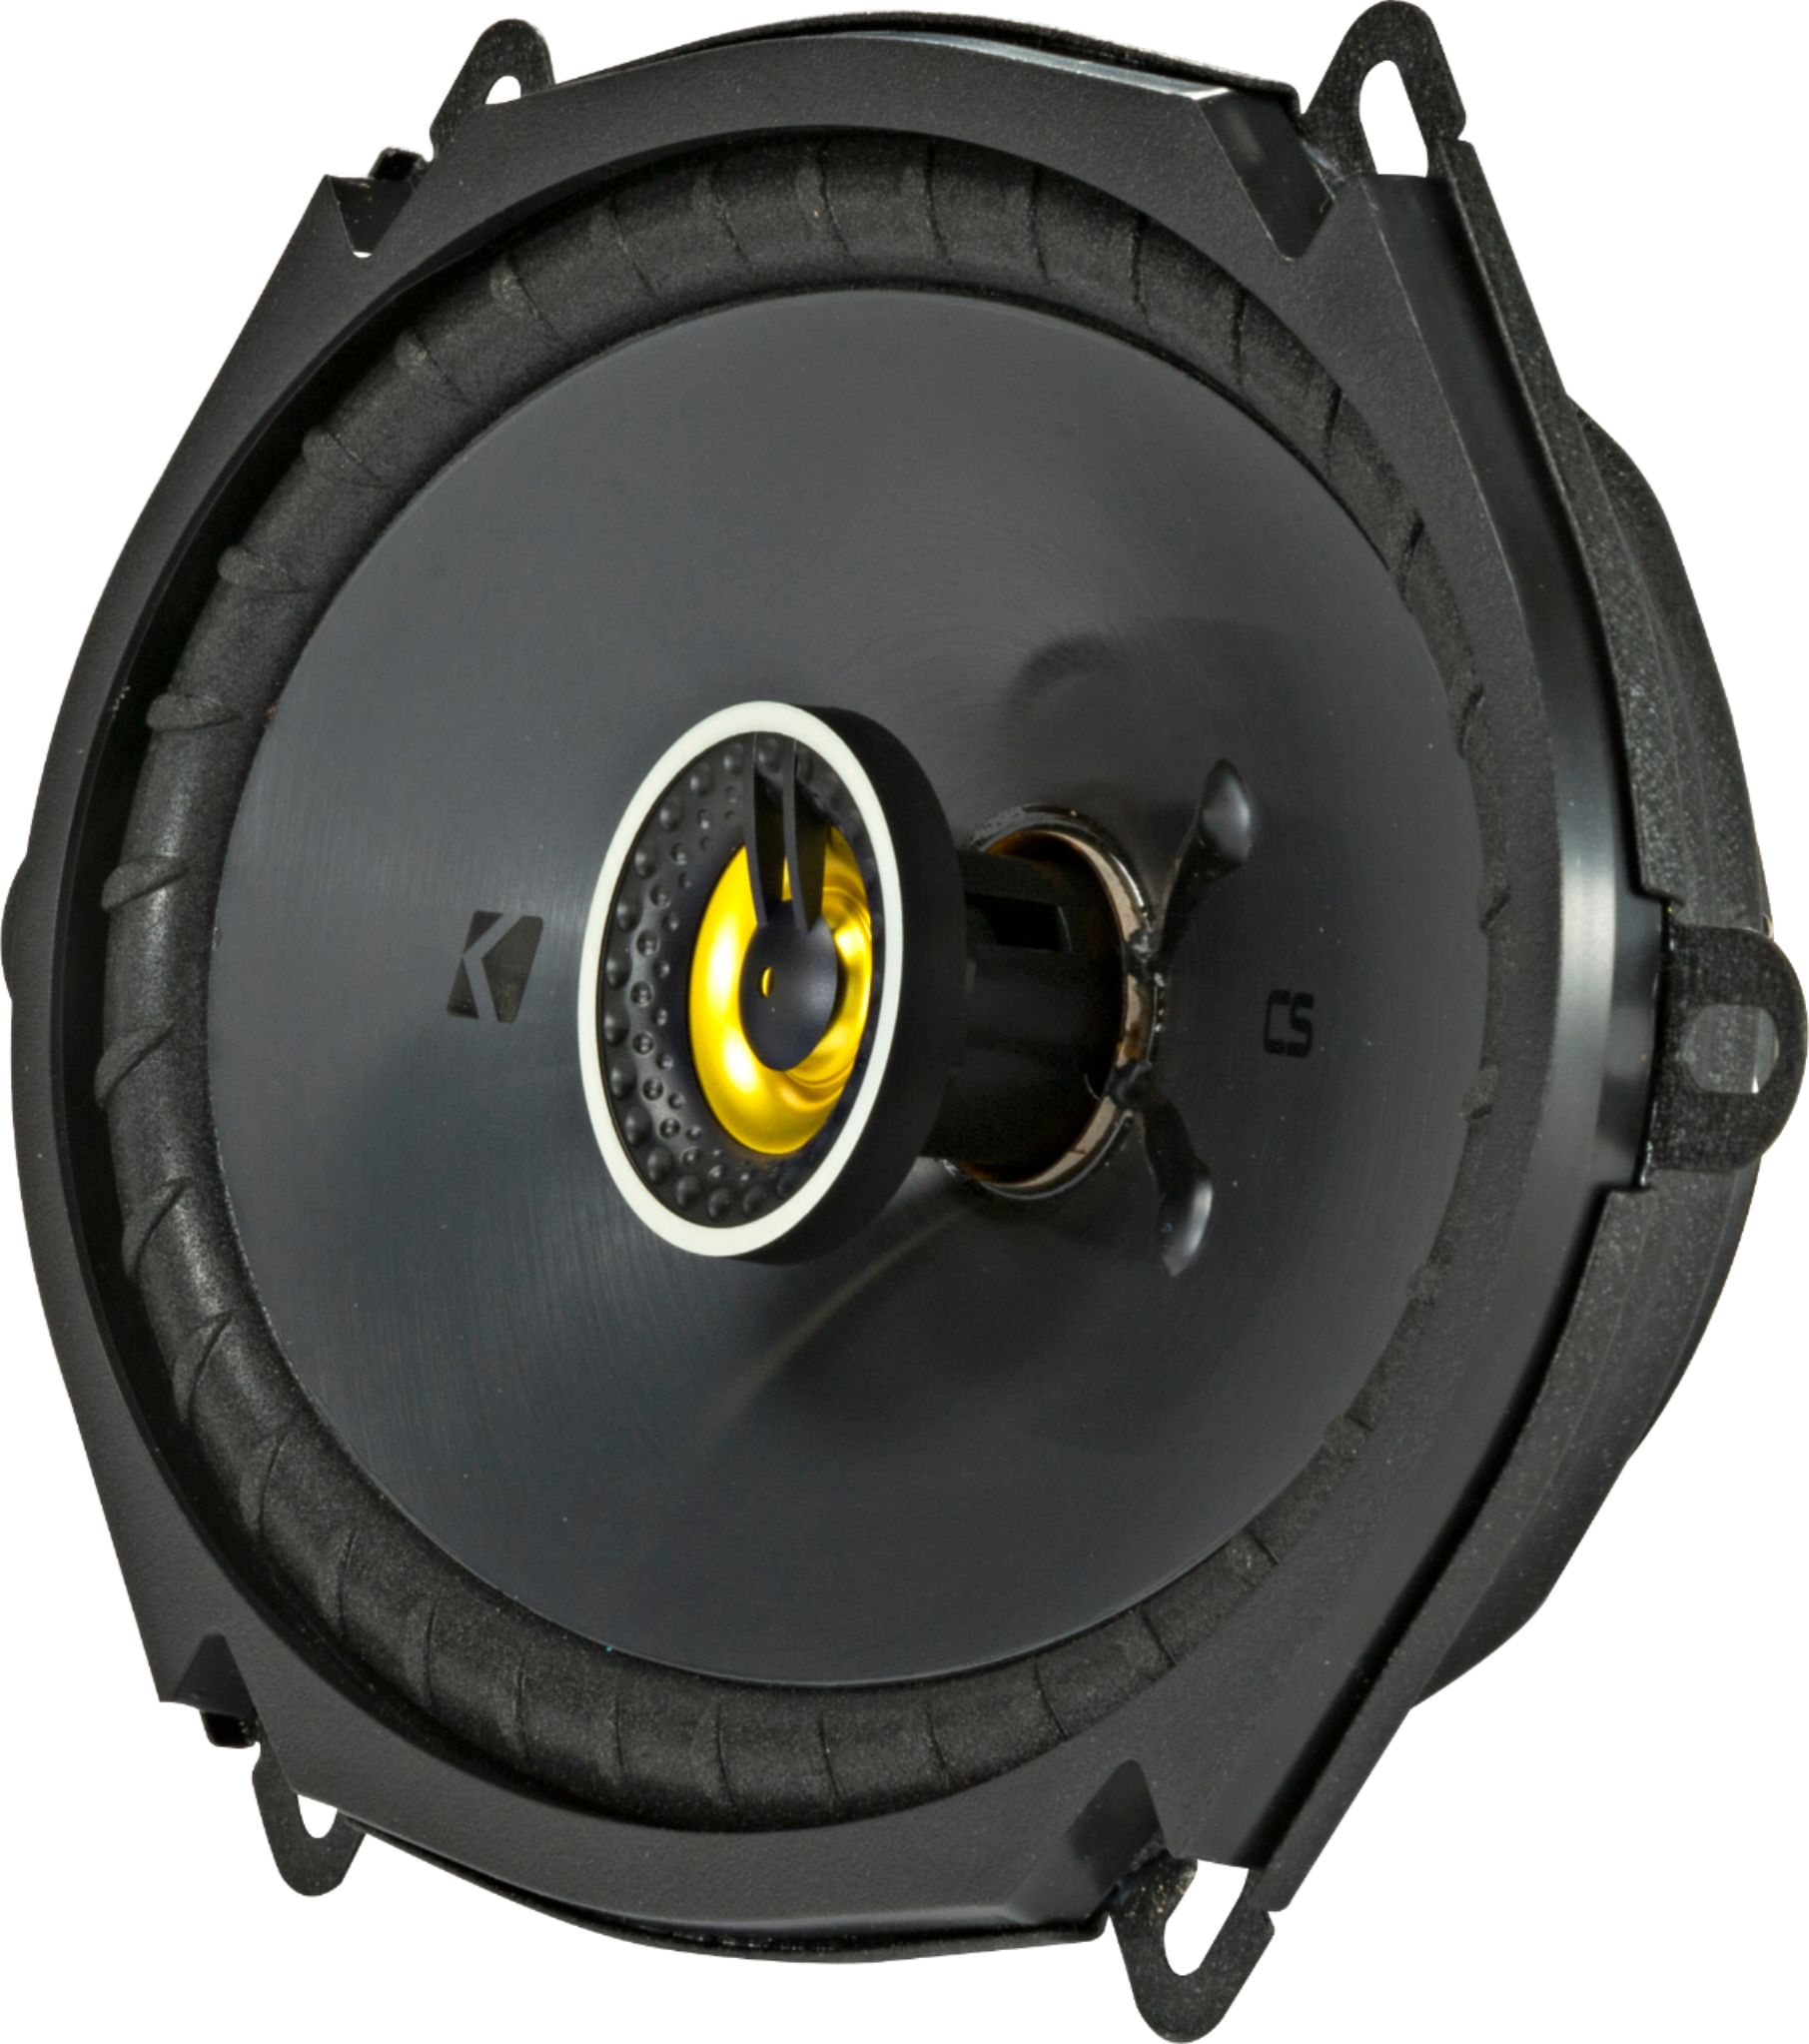 Left View: KICKER - CS Series 6" x 8" 2-Way Car Speakers with Polypropylene Cones (Pair) - Yellow/Black